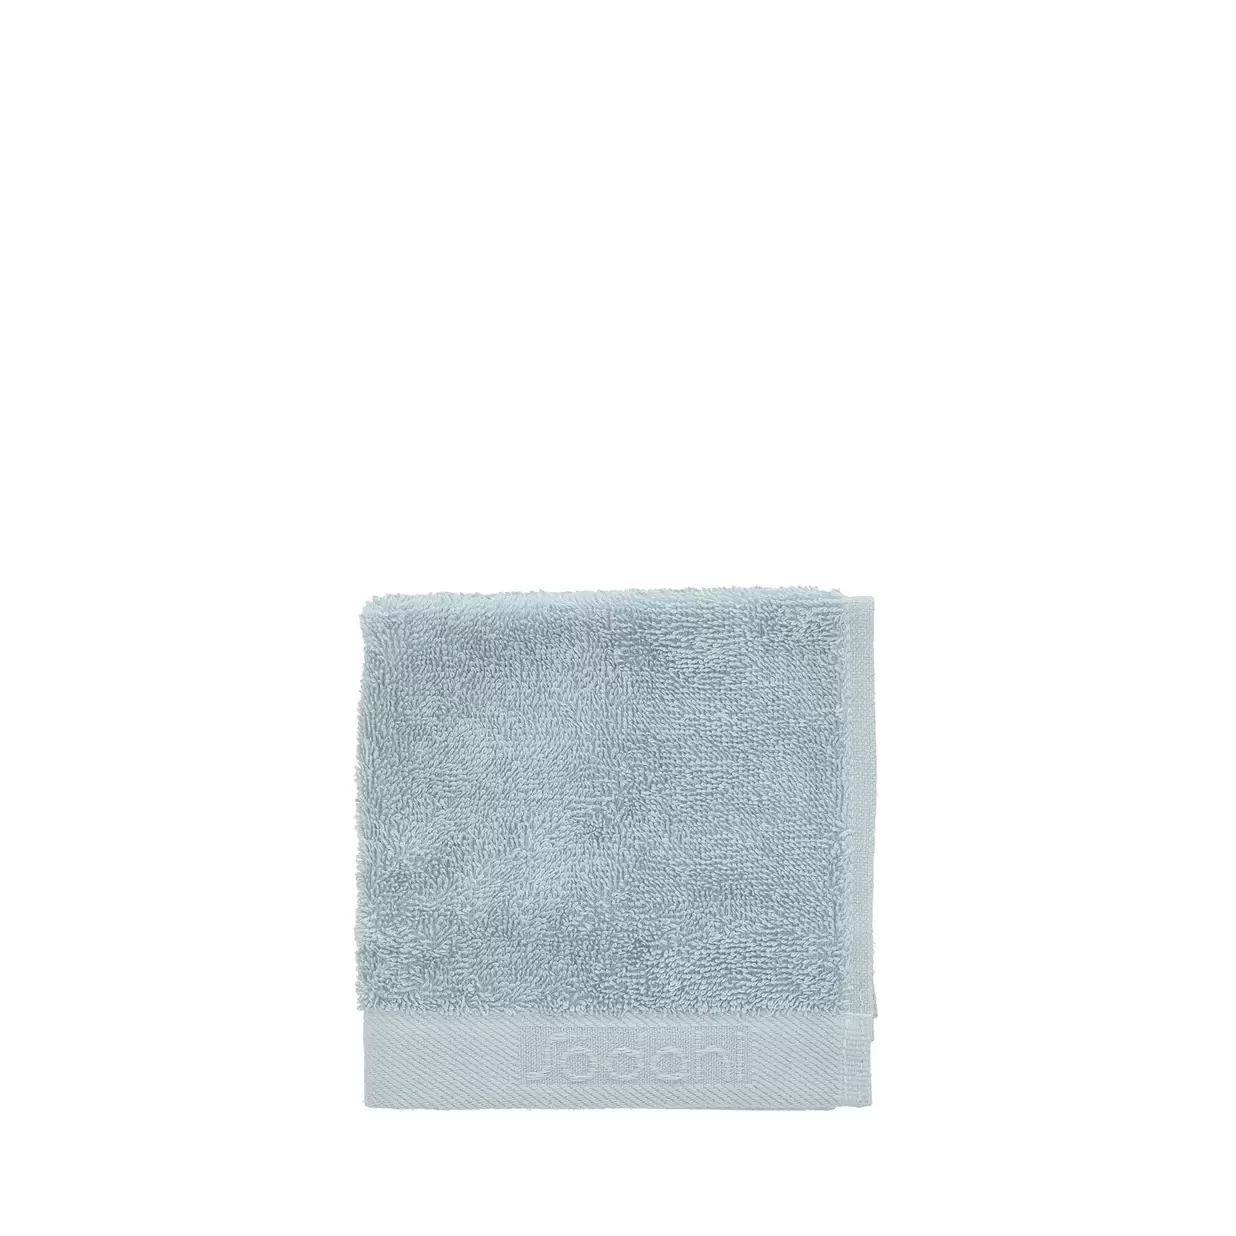 SÖDAHL Comfort vaskeklud 30x30 cm linen blue på tilbud til 29,95 kr. hos Sinnerup